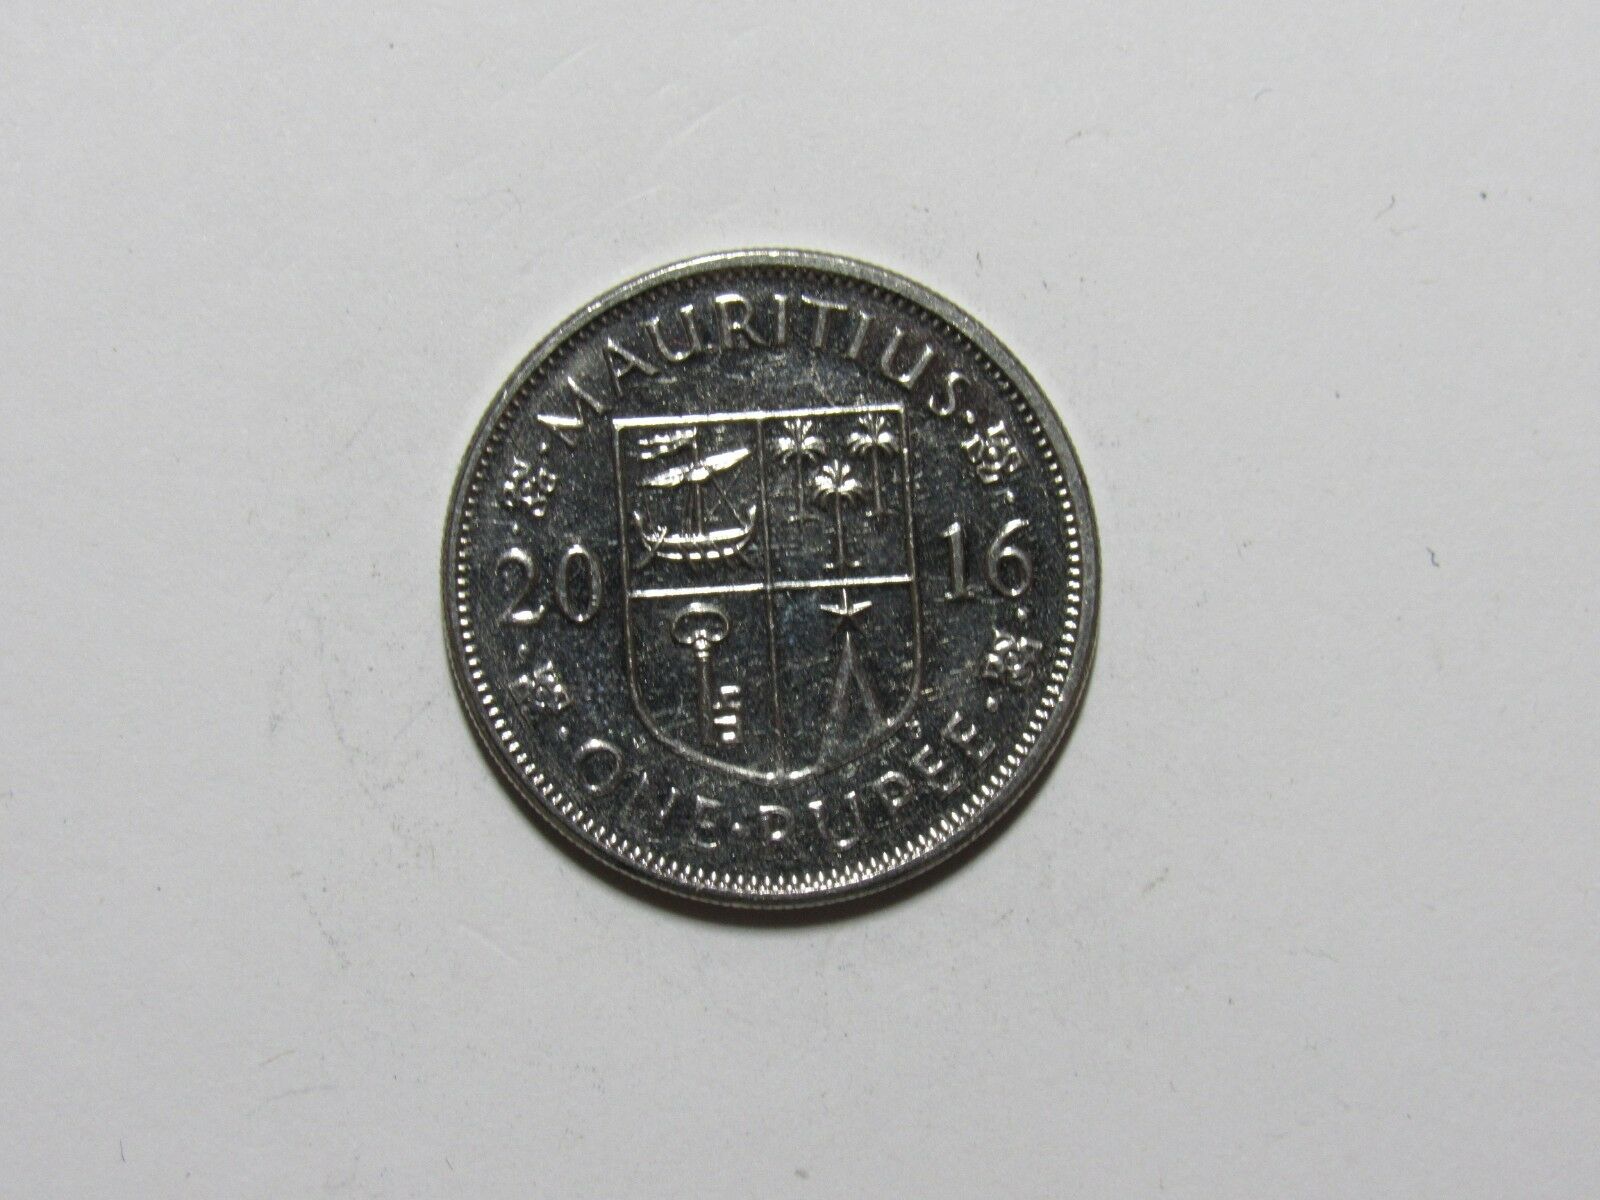 Mauritius Coin - 2016 One Rupee - Brilliant Uncirculated